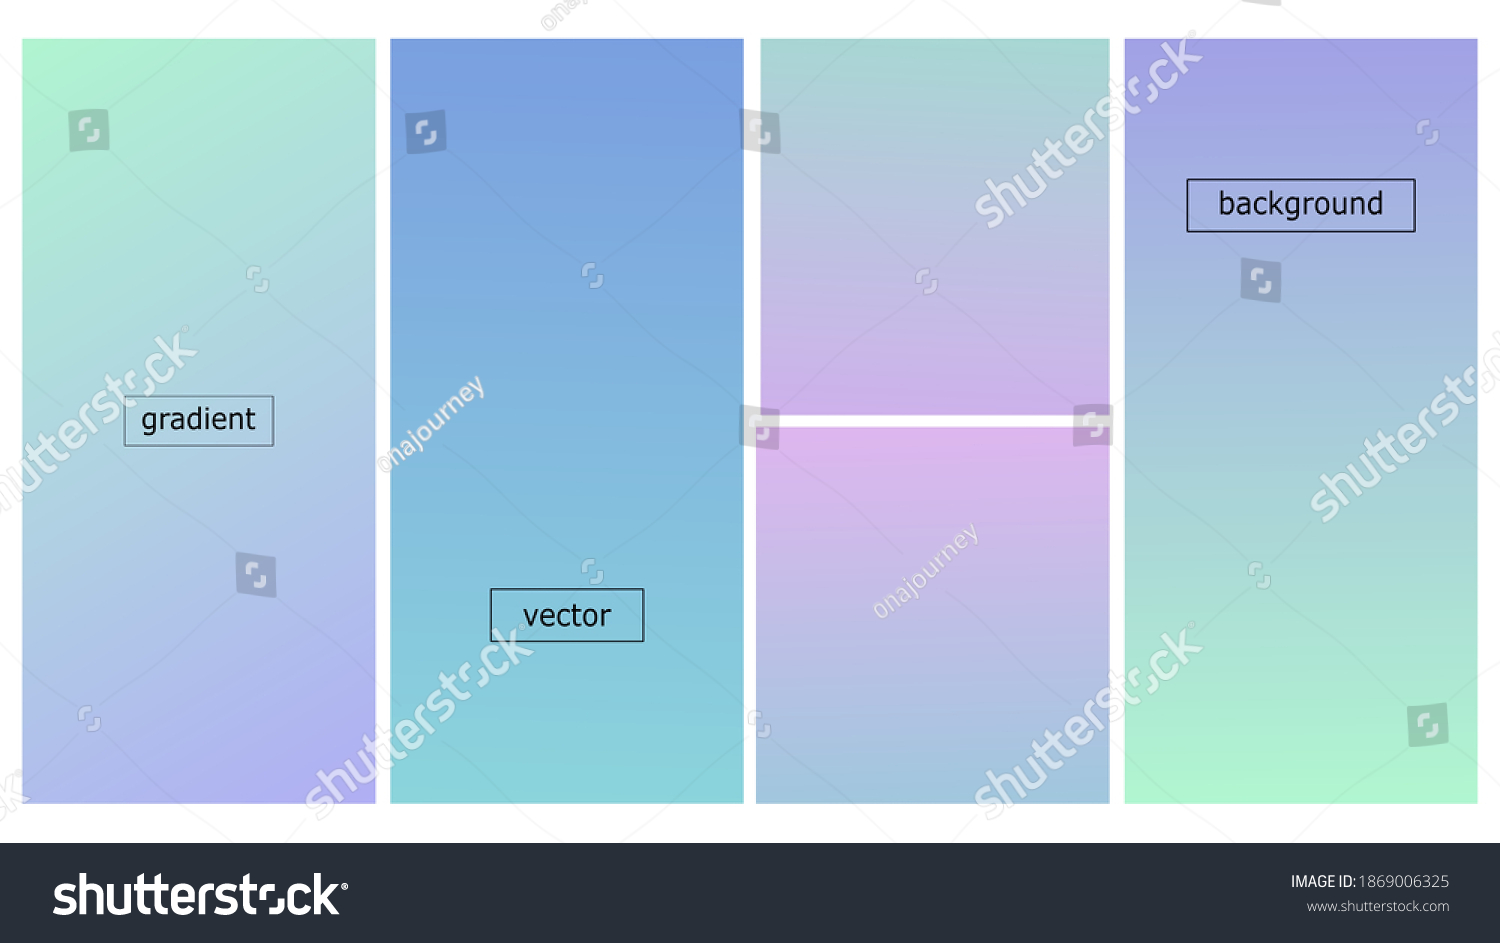 SVG of Gradient background set of blue color vectors. Abstract gradient light to dark blue azure violet color blend simple gradients set. Trendy minimalist editable web design cover svg